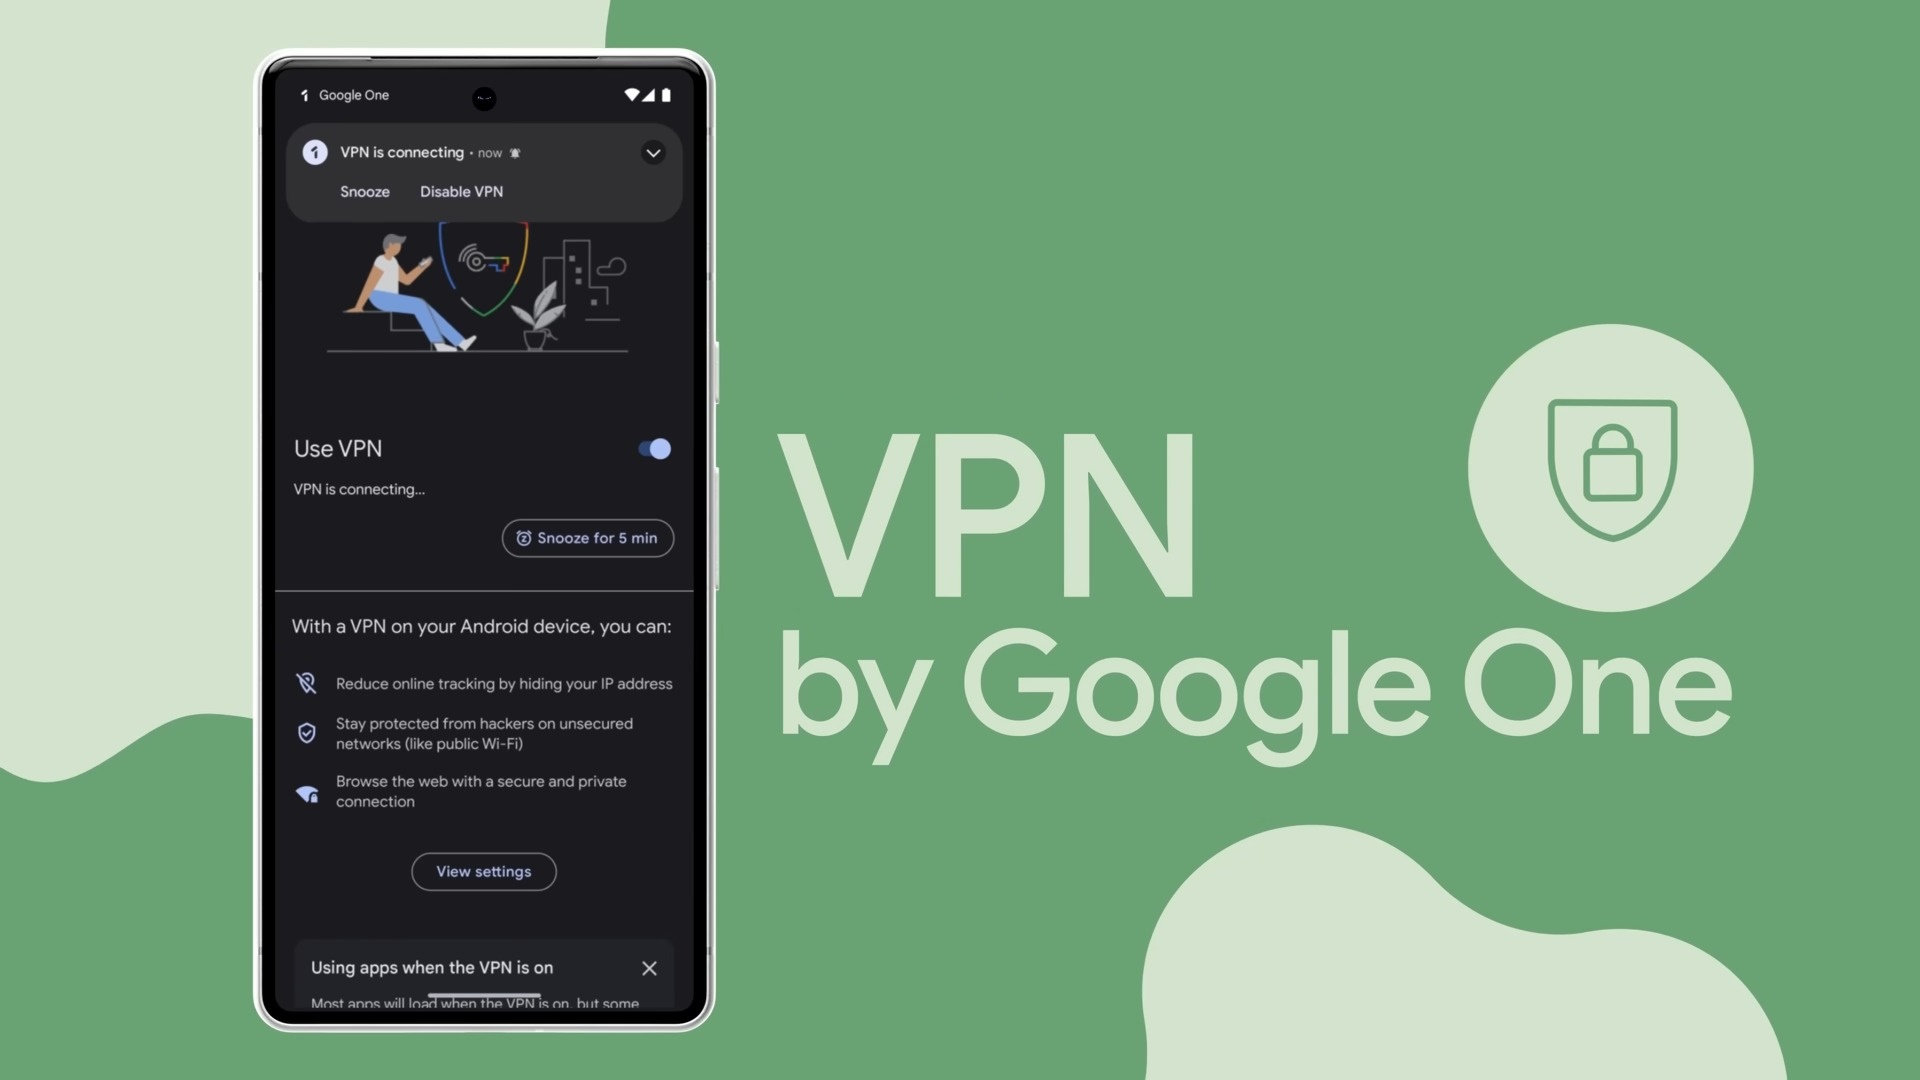 Google Pixel Feature Drop VPN by Google One